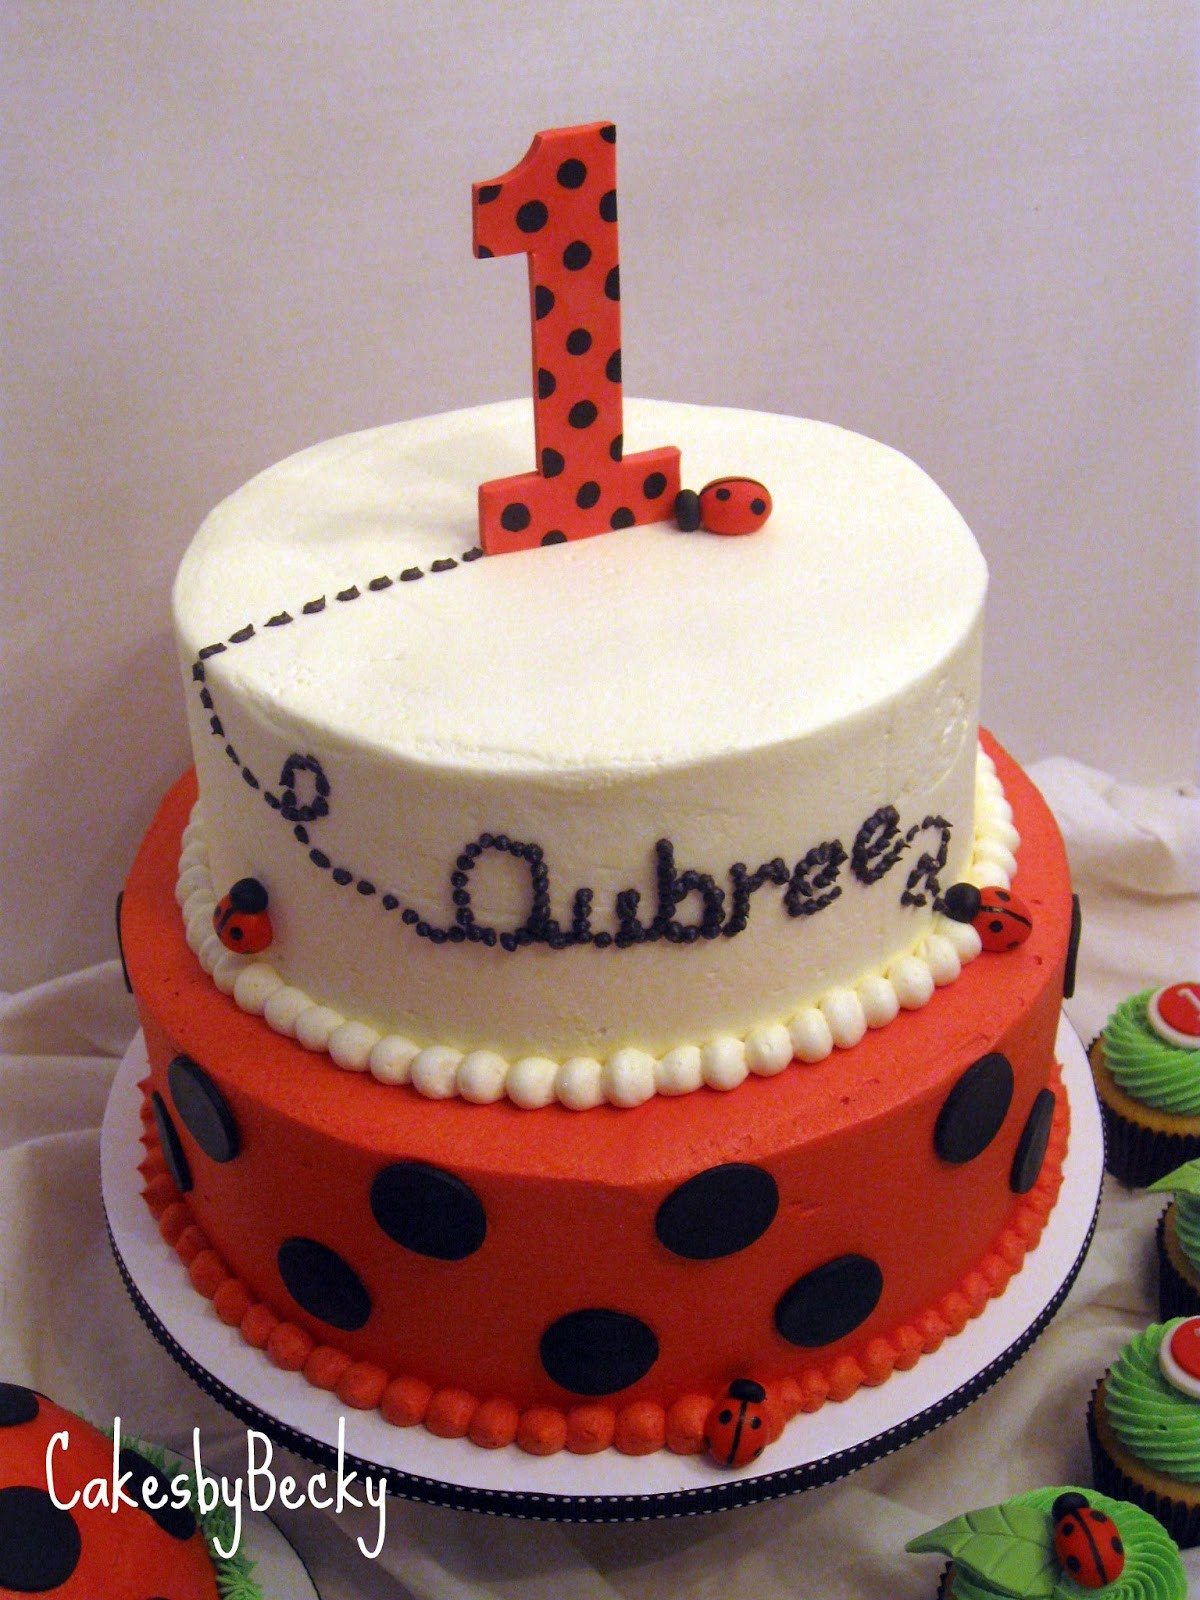 Ladybug Birthday Cakes
 Cakes by Becky Ladybug First Birthday